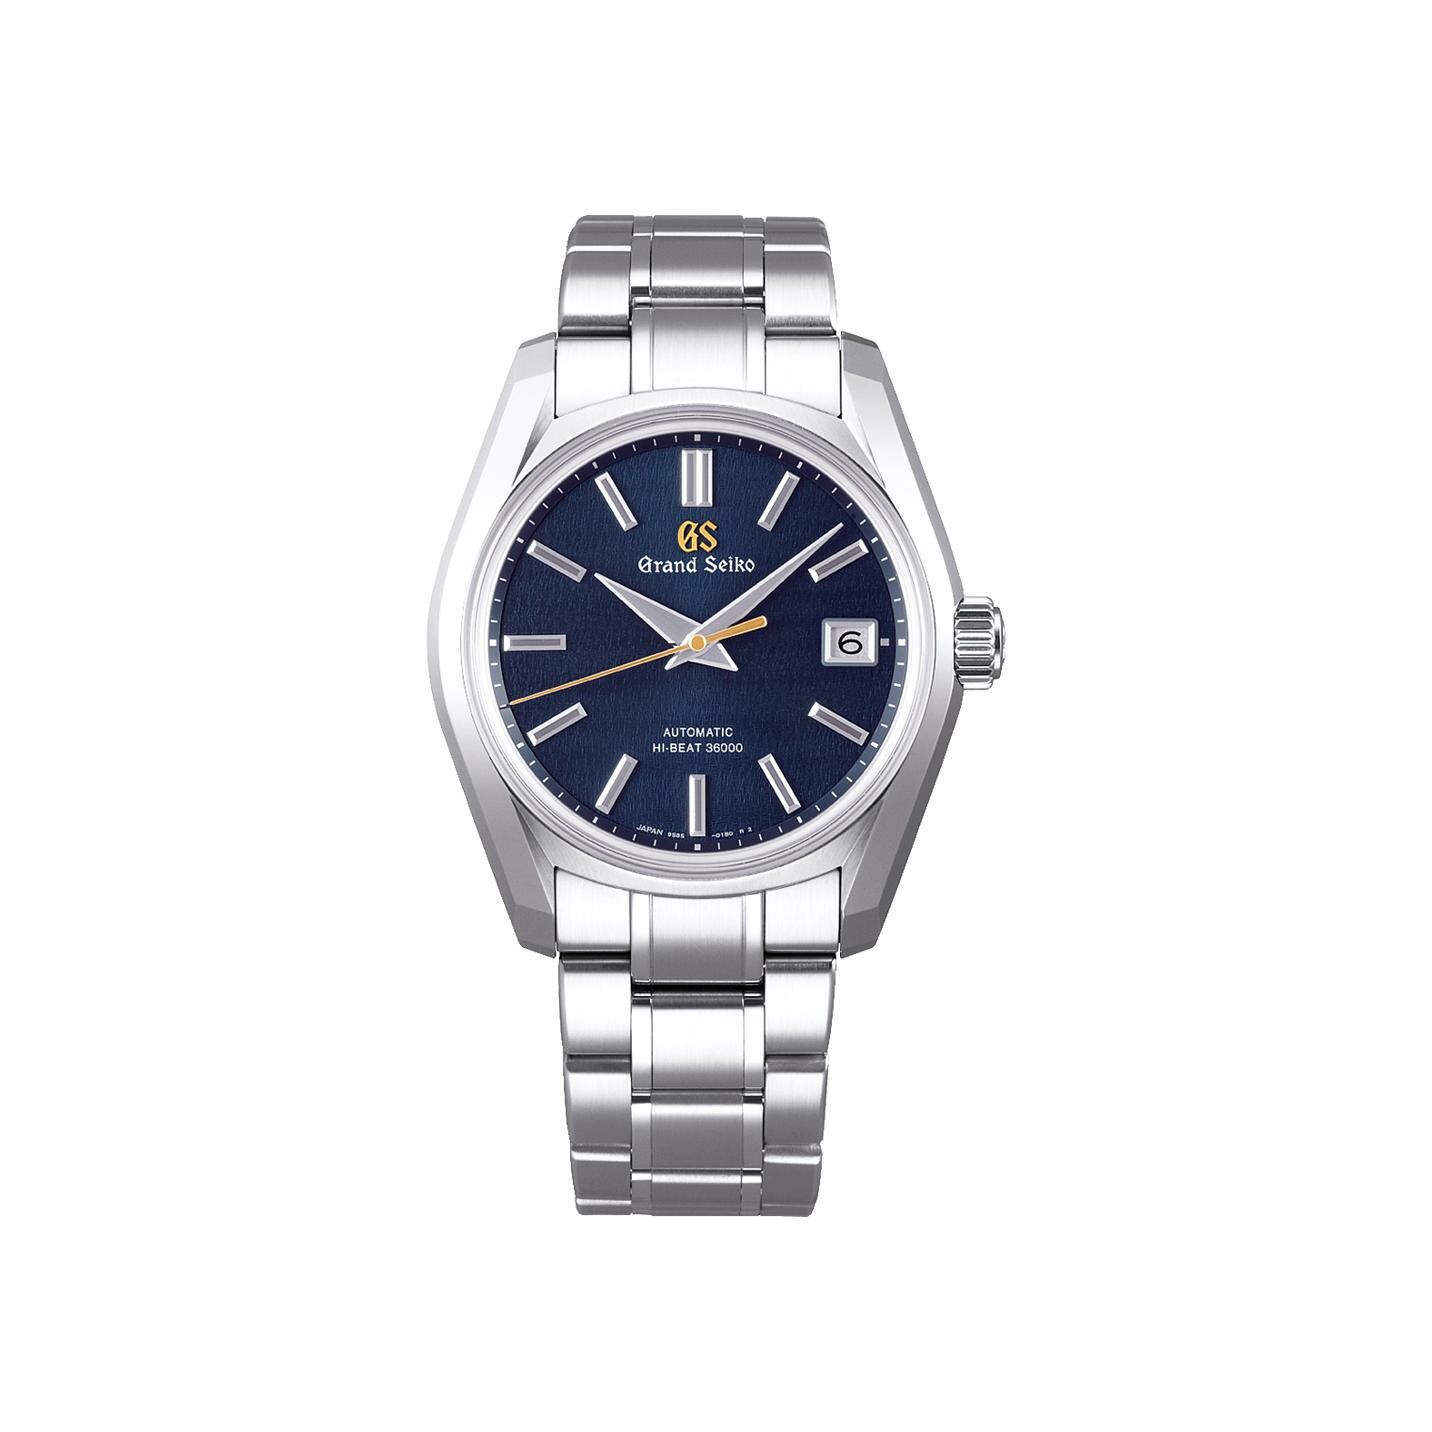 Purchase Grand Seiko Heritage SBGH299 watch